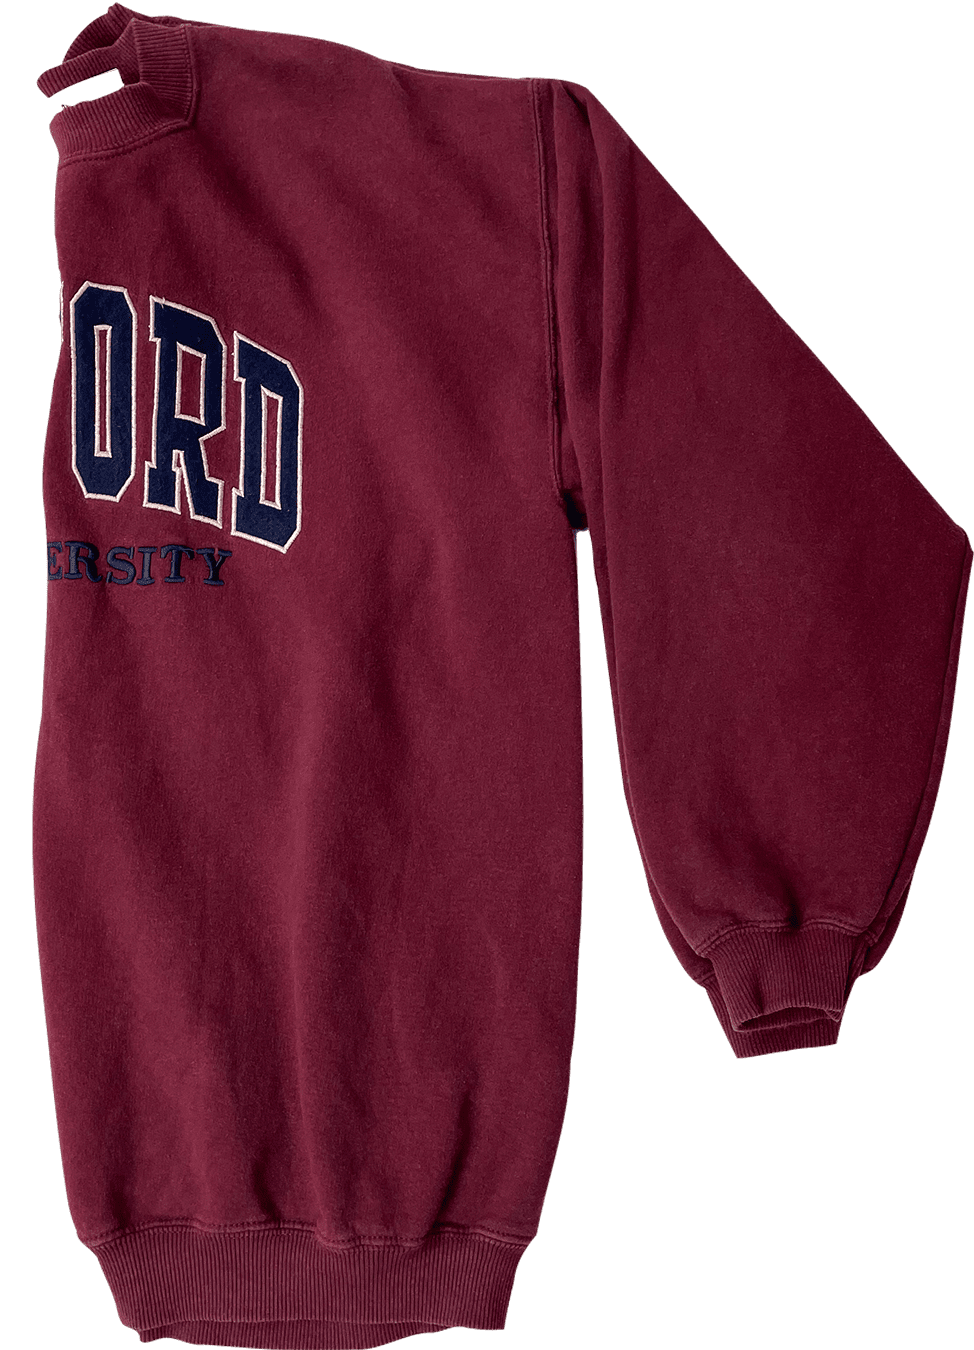 Oxford Embroidered Sweatshirt